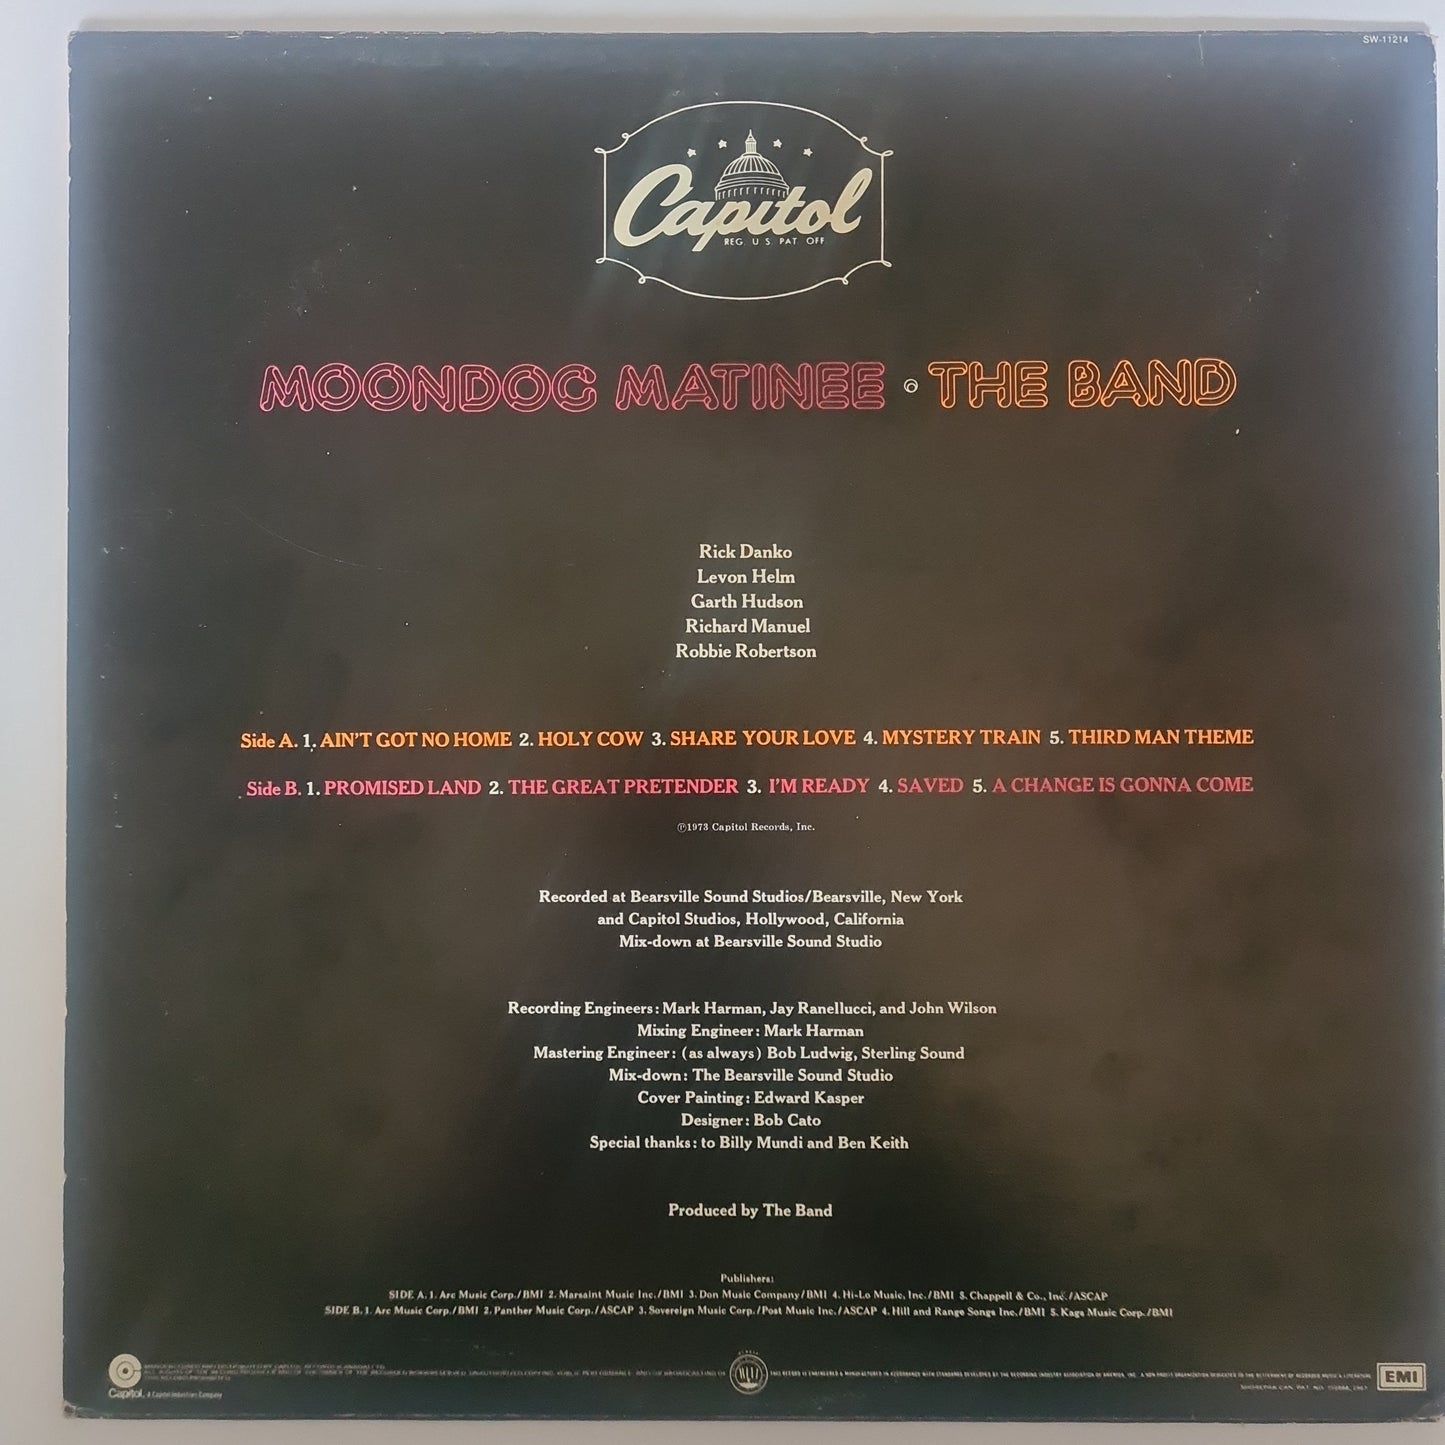 The Band – Moondog Matinee - 1973 - Vinyl Record